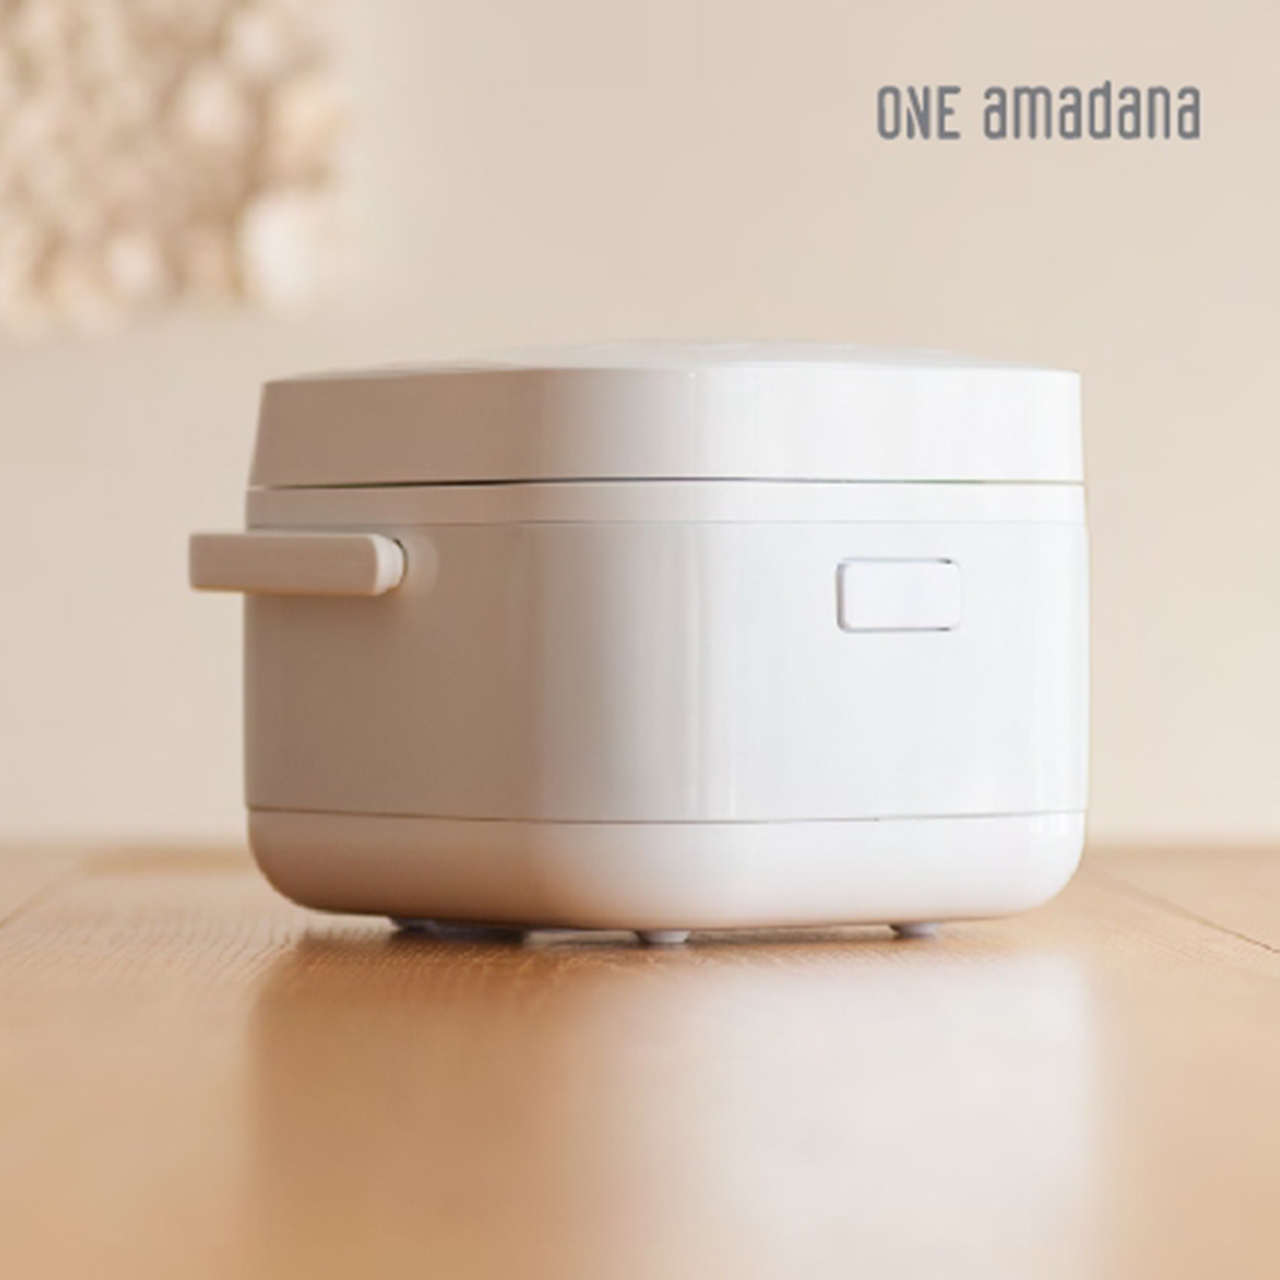 ONE amadana,生活選物,生活雜貨,日本品牌,日本電器品牌,電器品牌